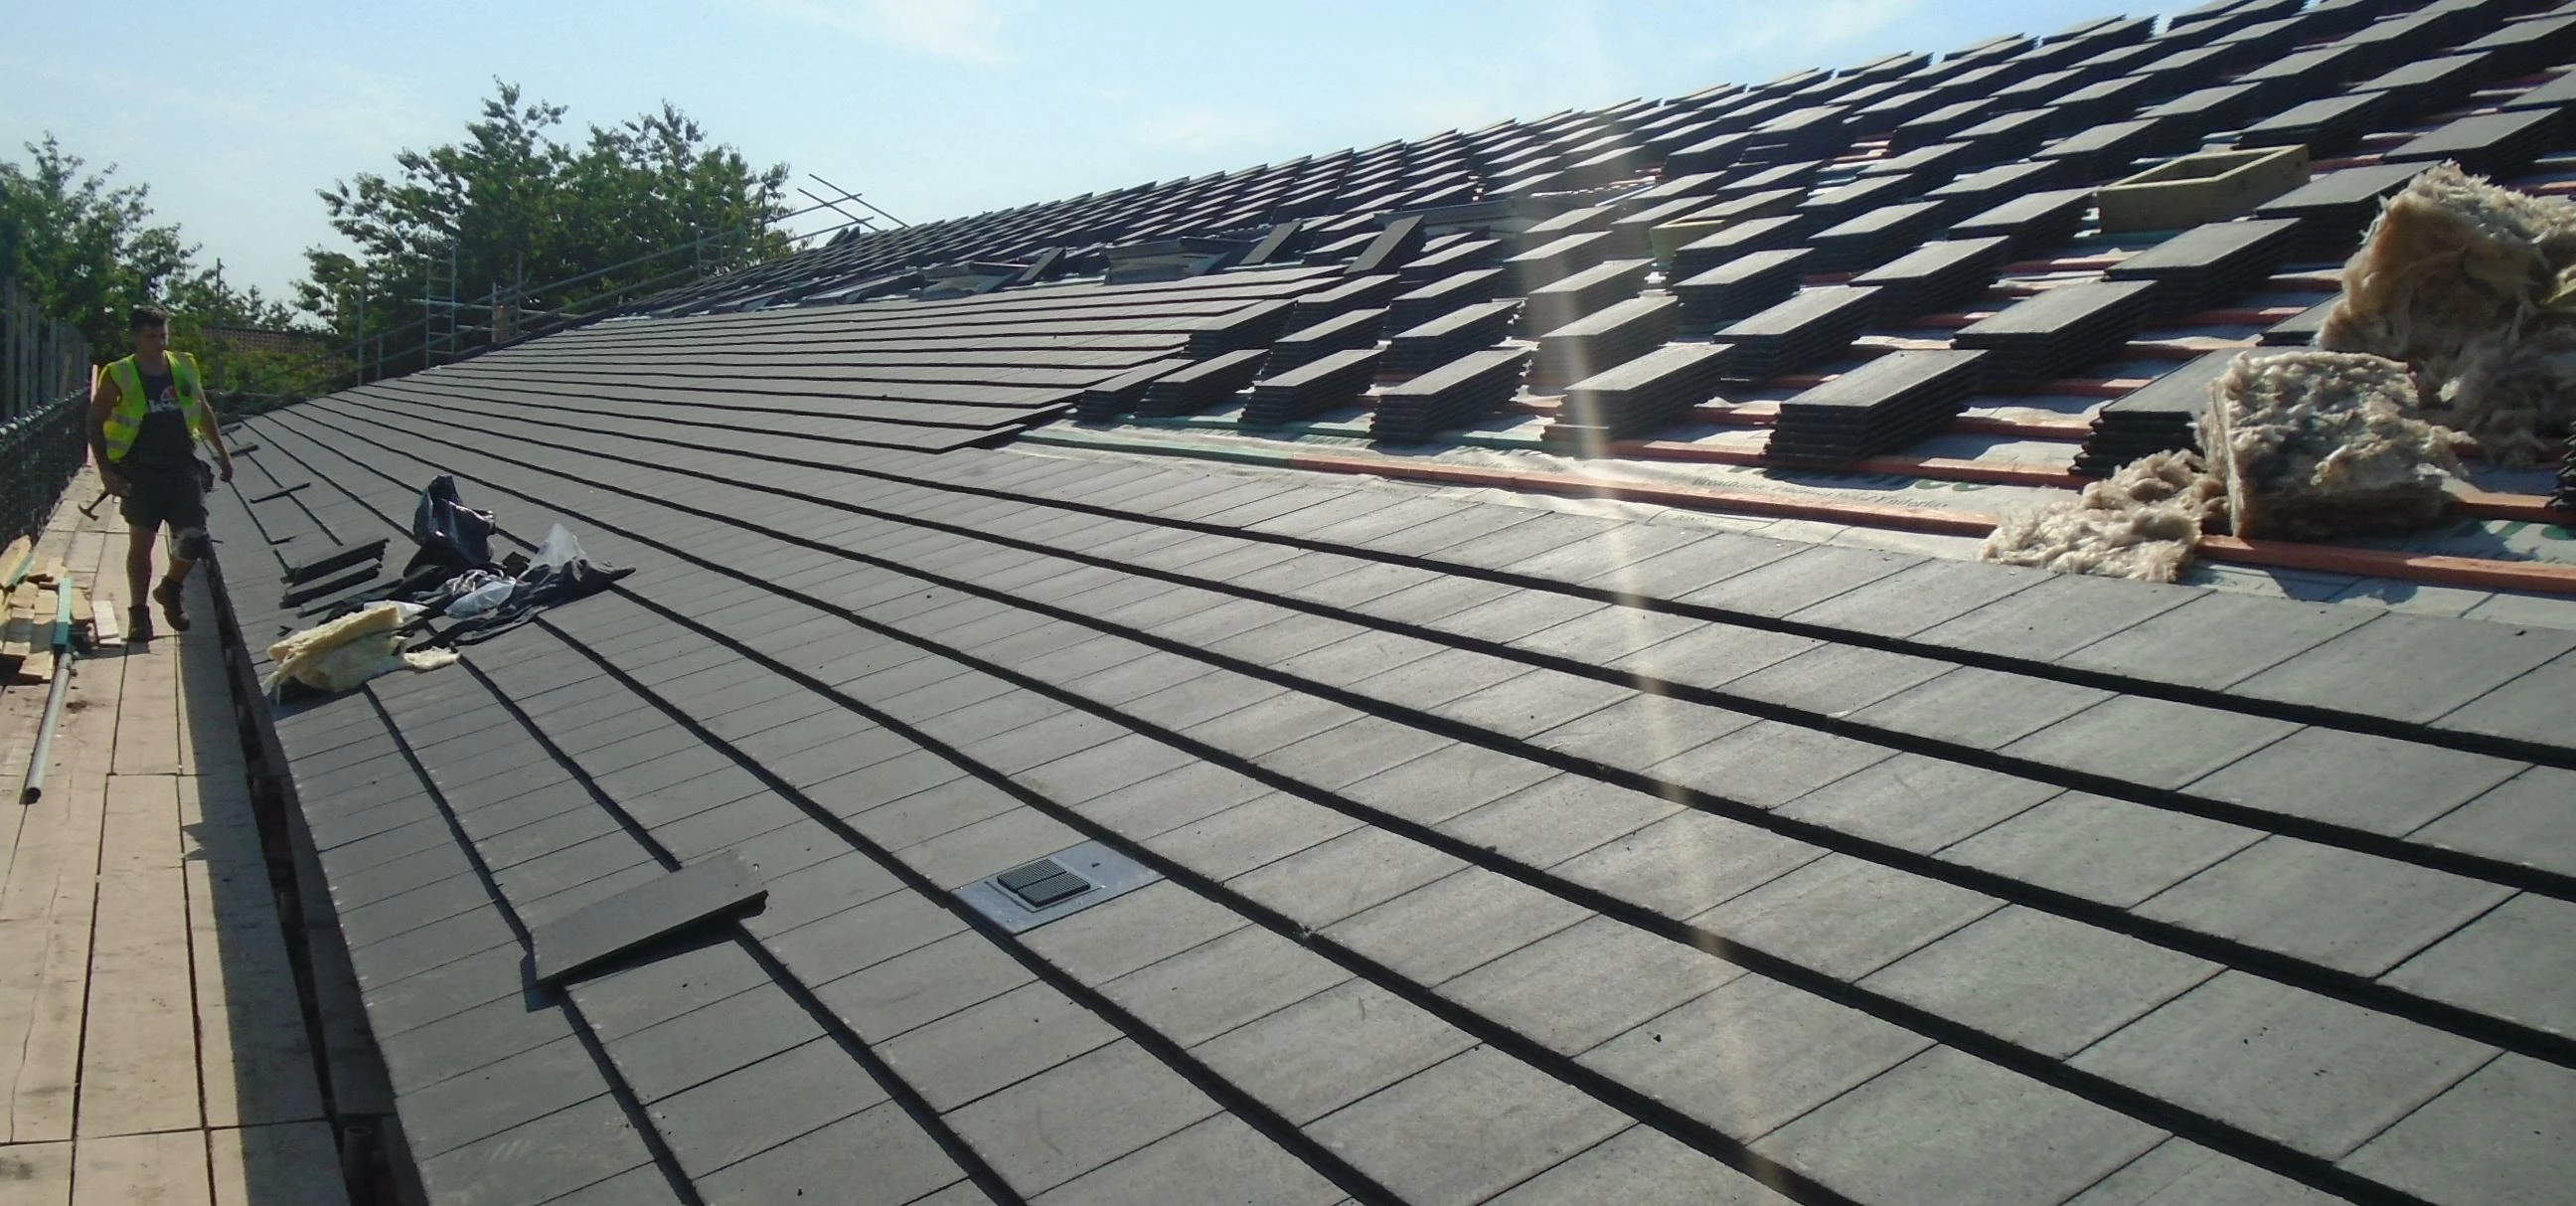 Martin-Brooks’ expert roofers install concrete tiles at Sunnyside Spencer Academy in Nottingham, one